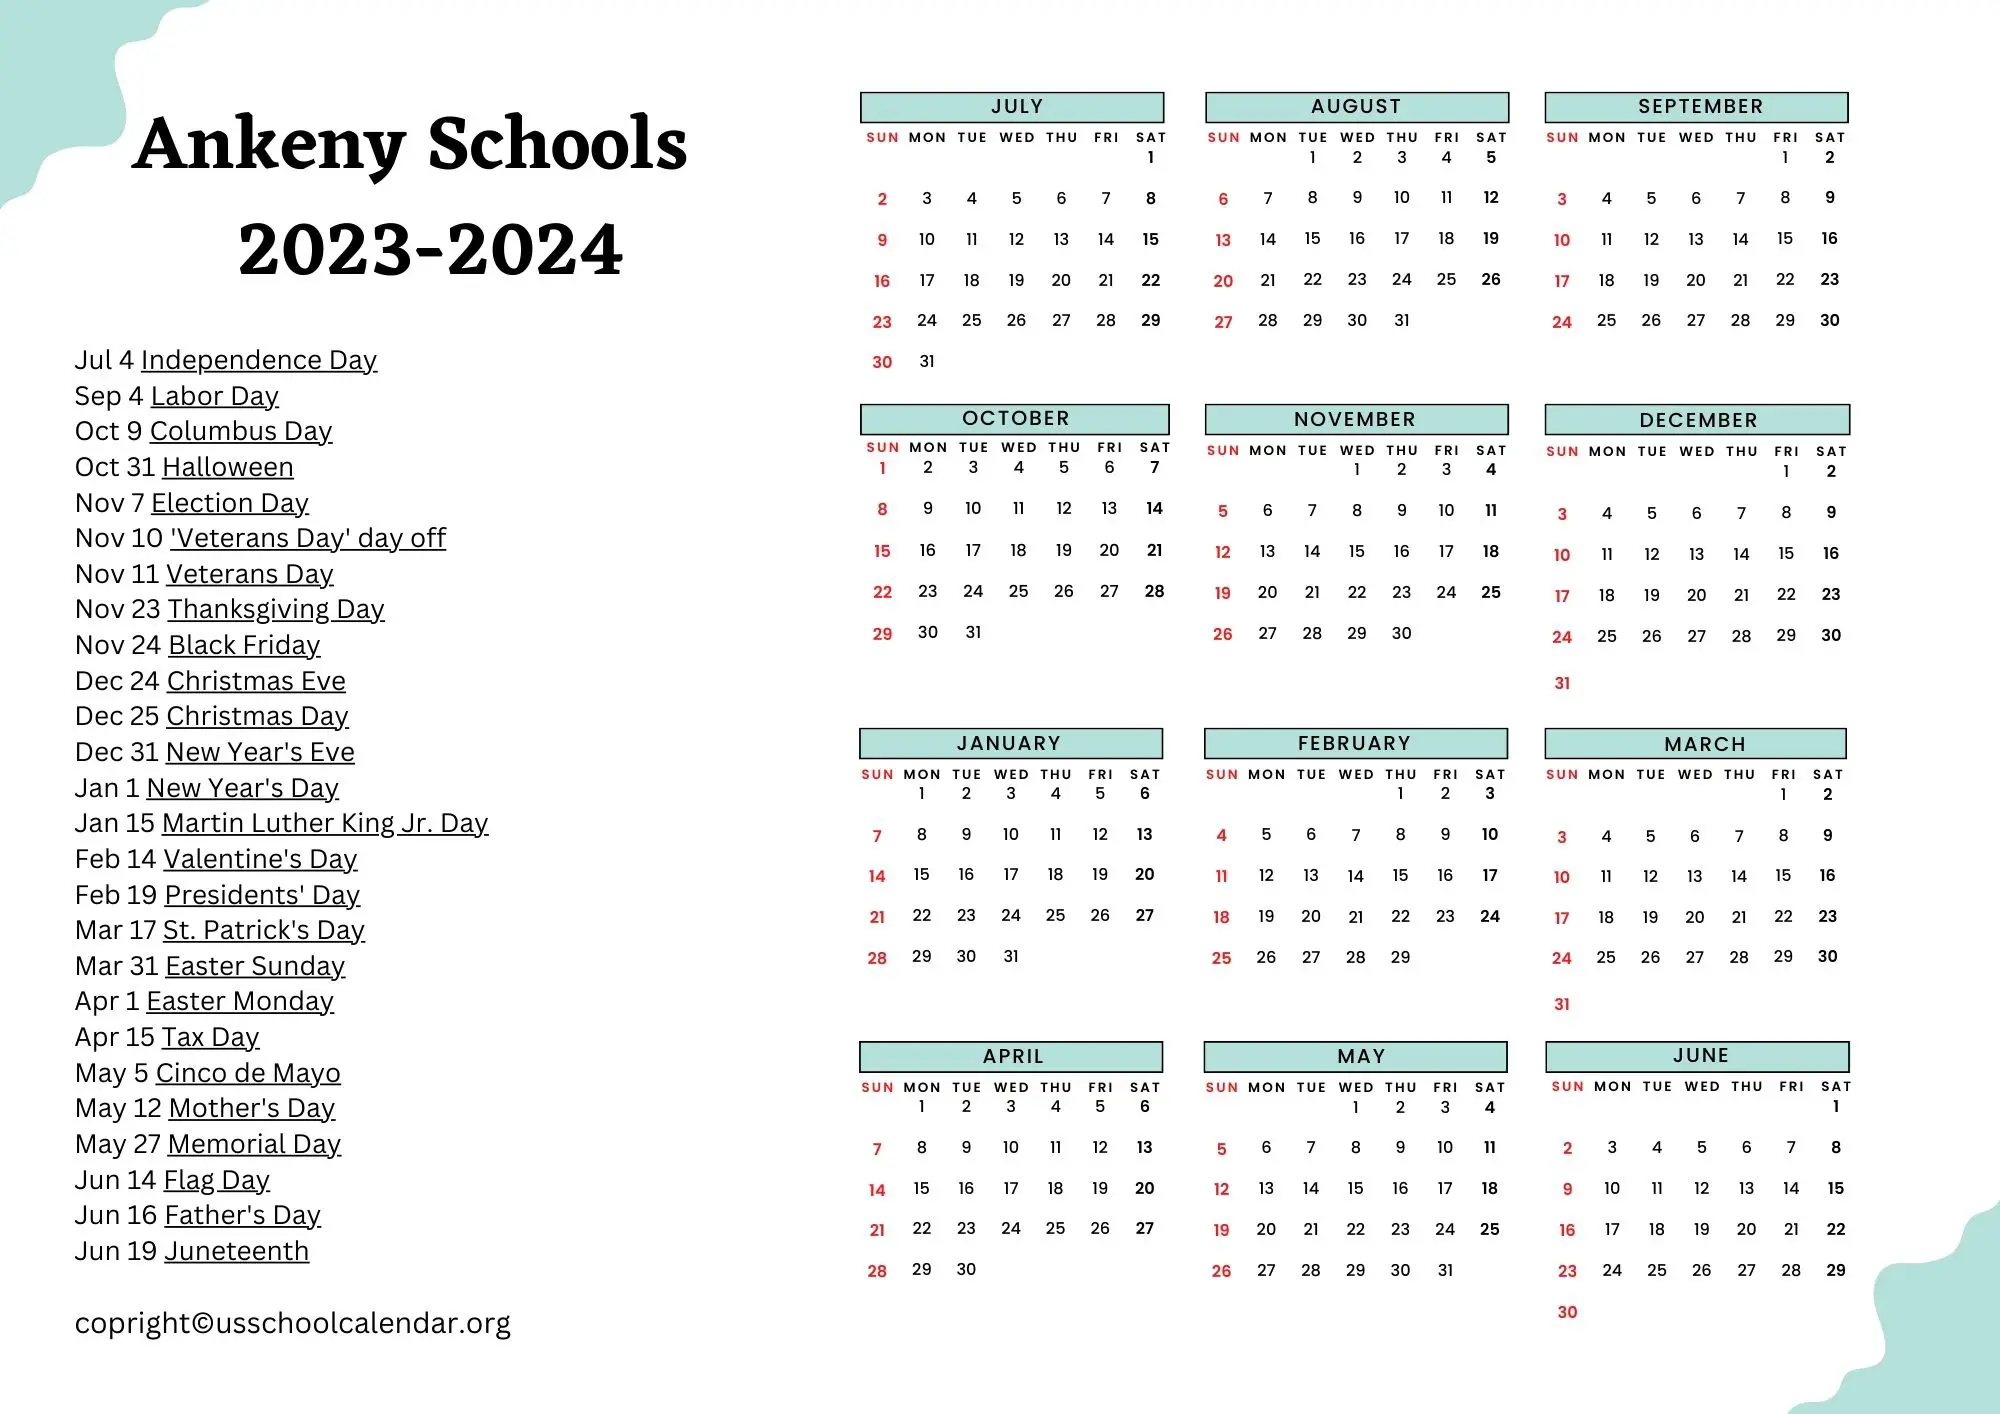 Ankeny Schools Calendar with Holidays 2023 2024